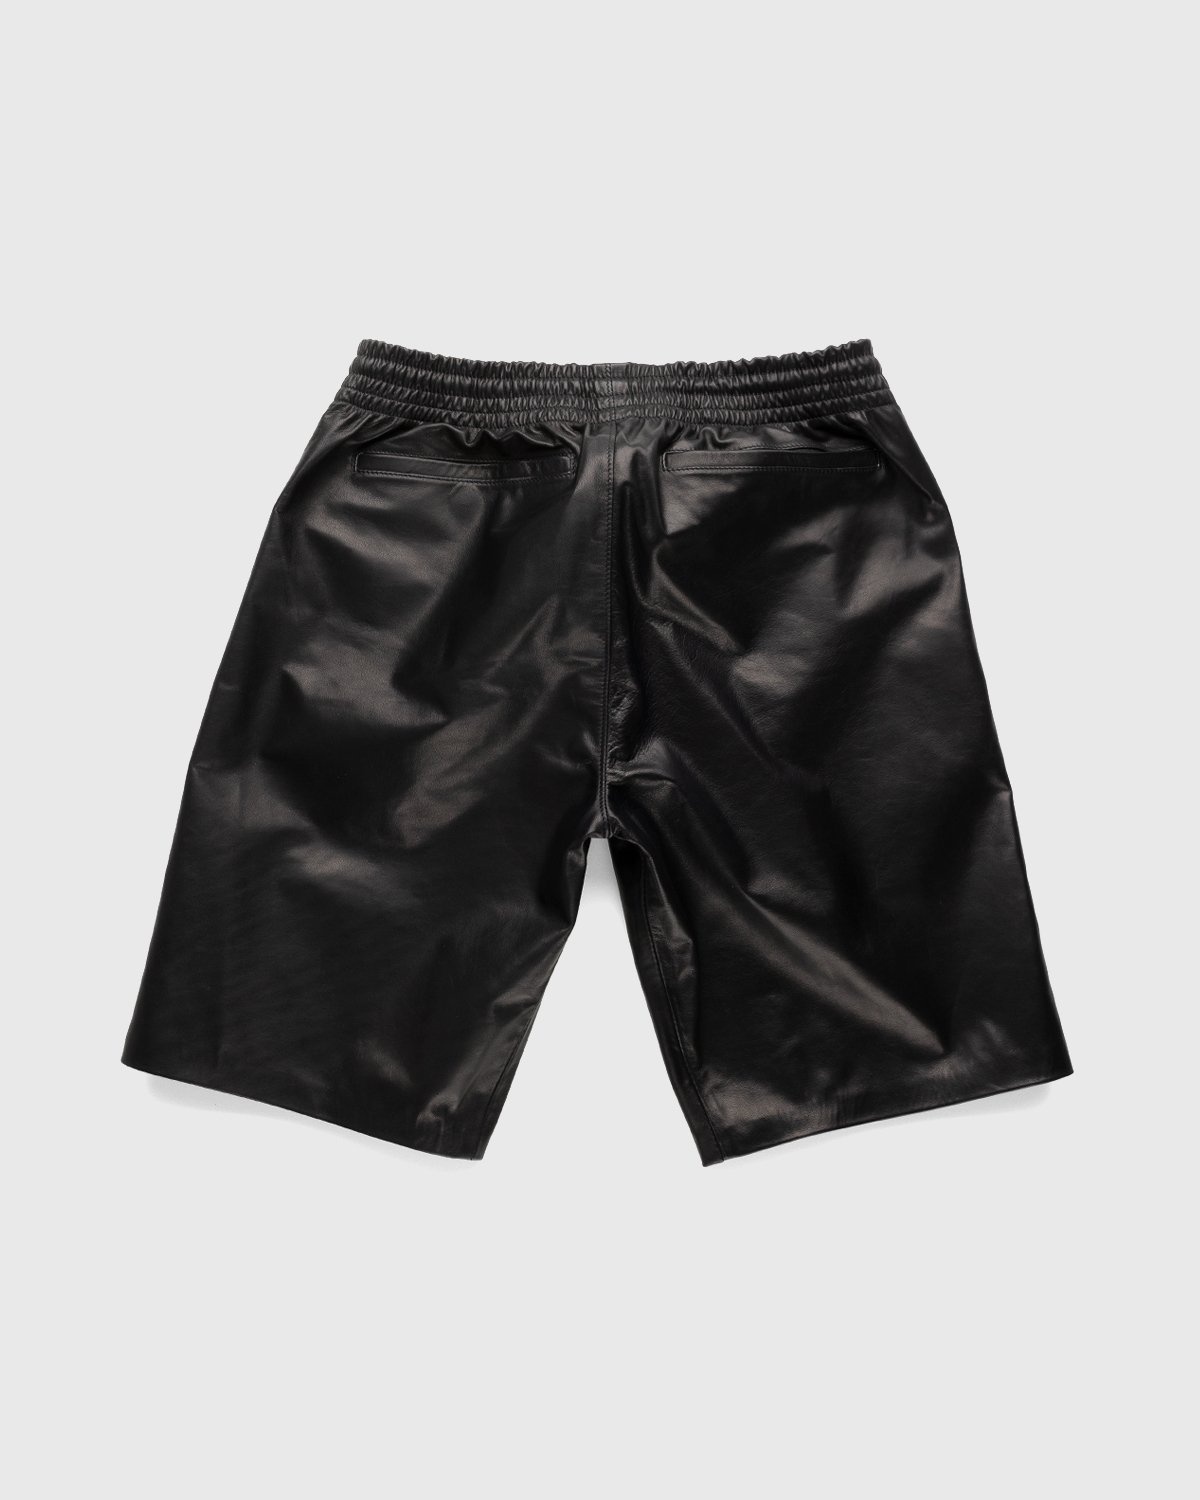 Highsnobiety x Butcherei Lindinger – Shorts Black - Shorts - Black - Image 2